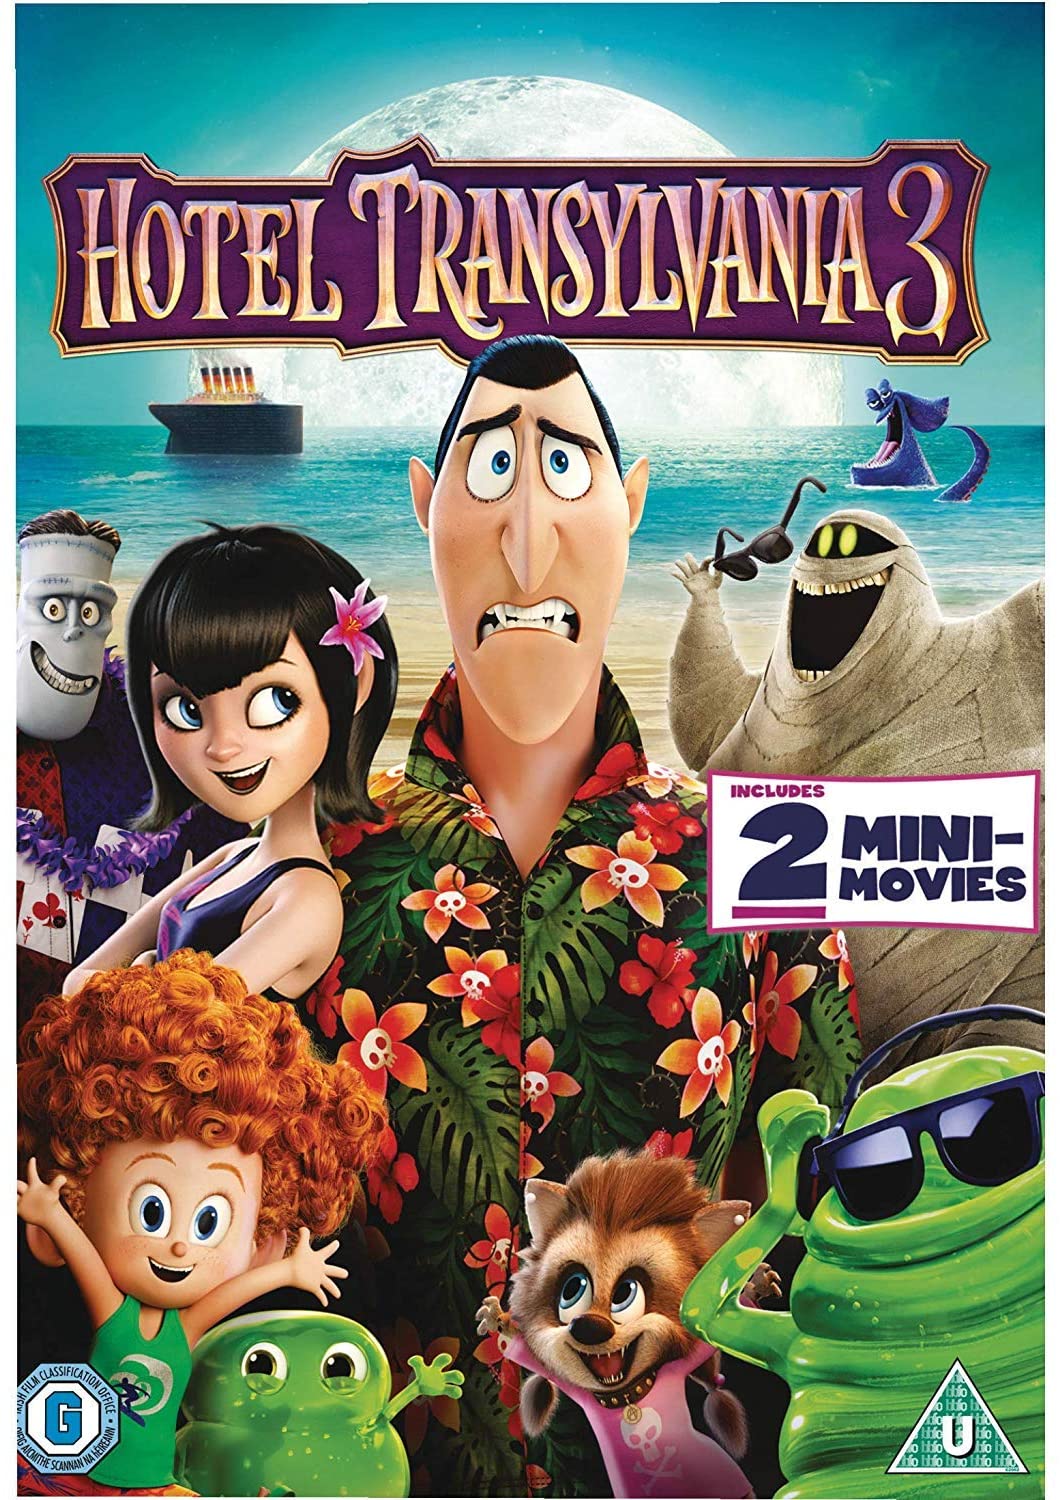 Hotel Transylvania 3 - Family/Comedy [DVD]